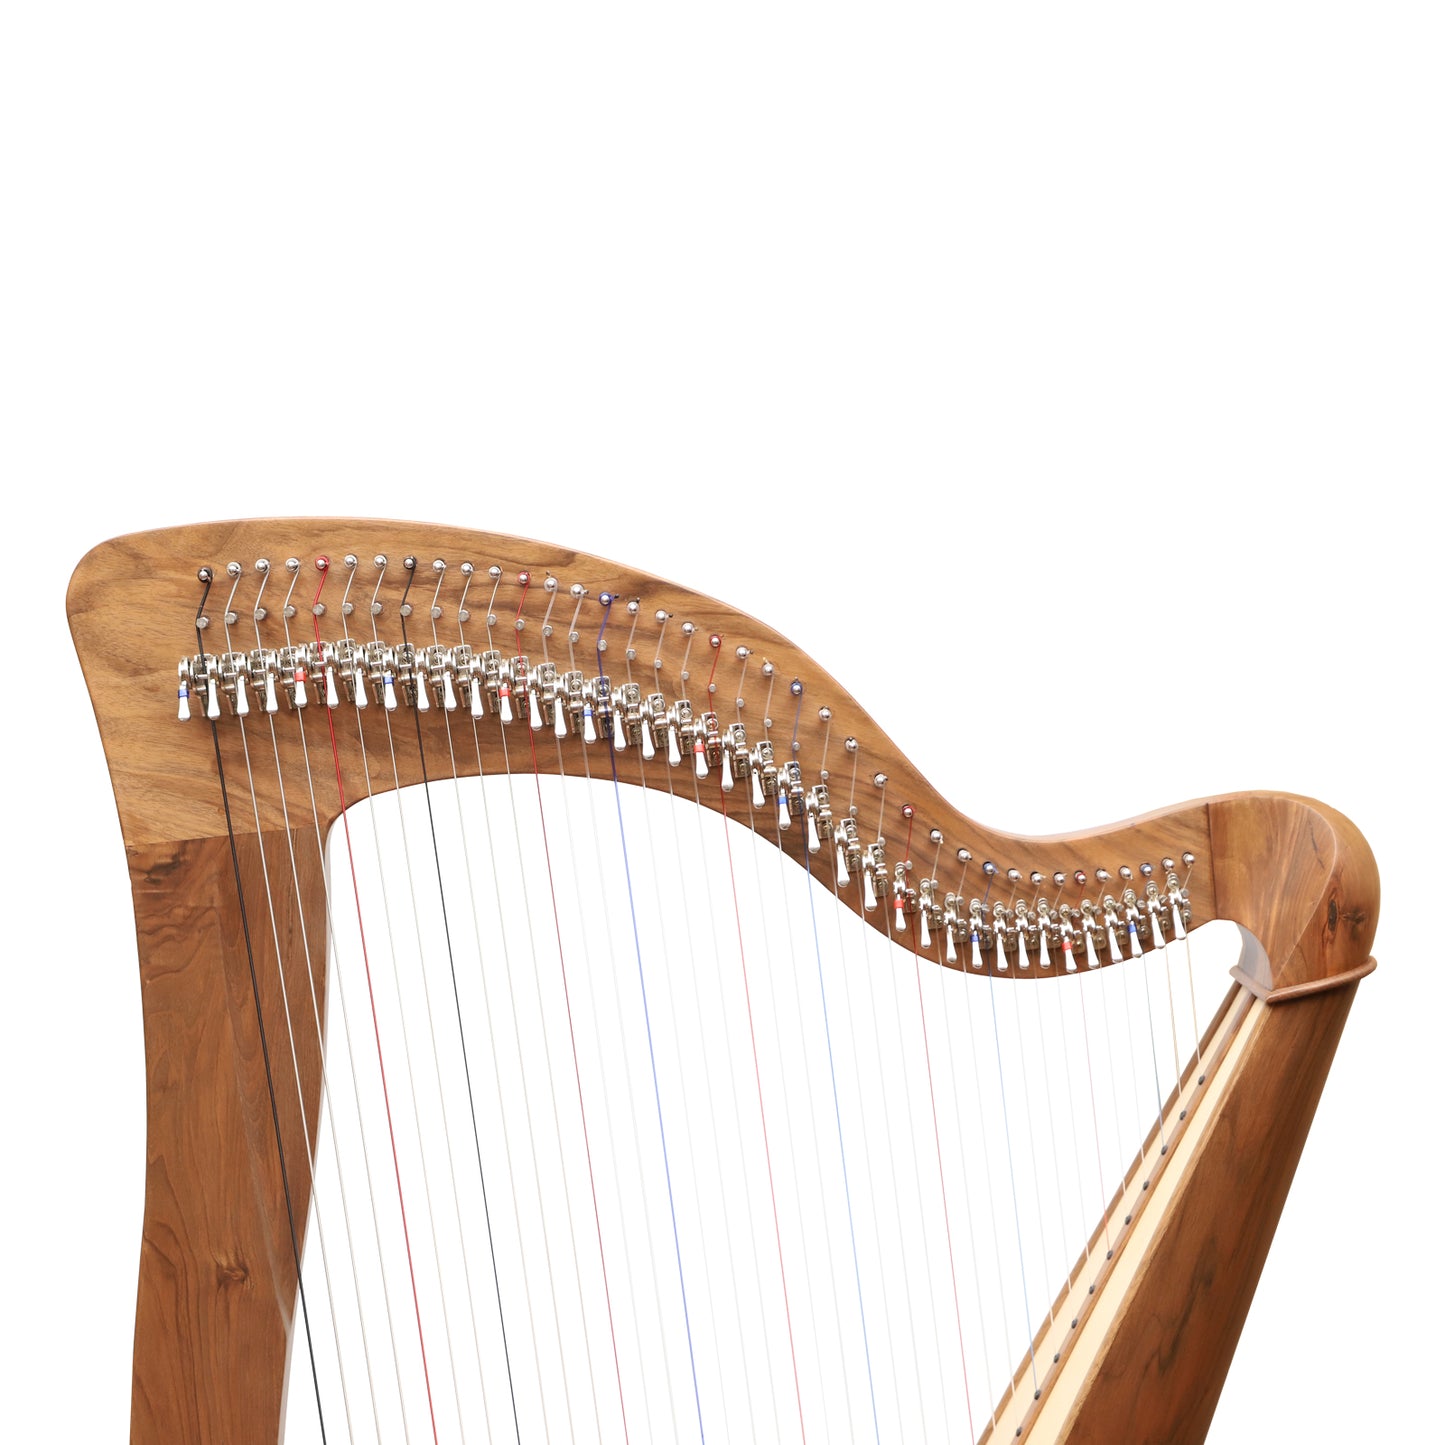 McHugh Harp 38 Strings Walnut Wood Round Back